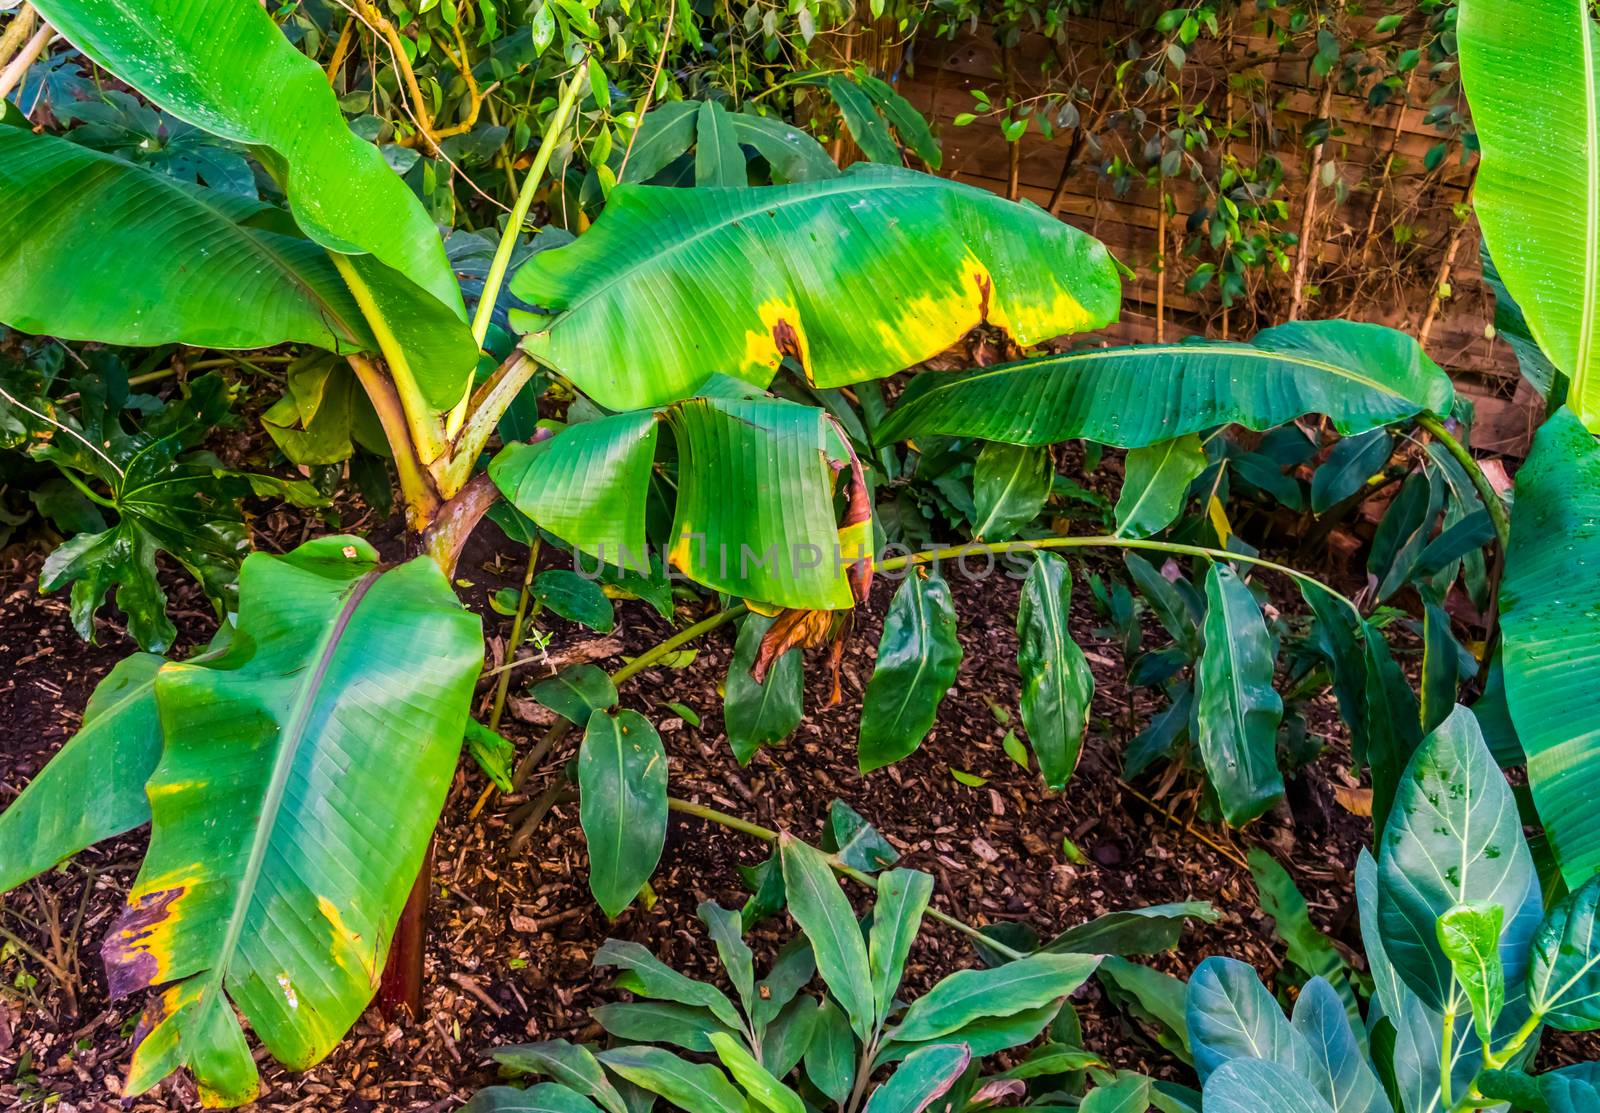 musa griersonii, Wild banana specie, popular ornamental tropical plants for the garden by charlottebleijenberg